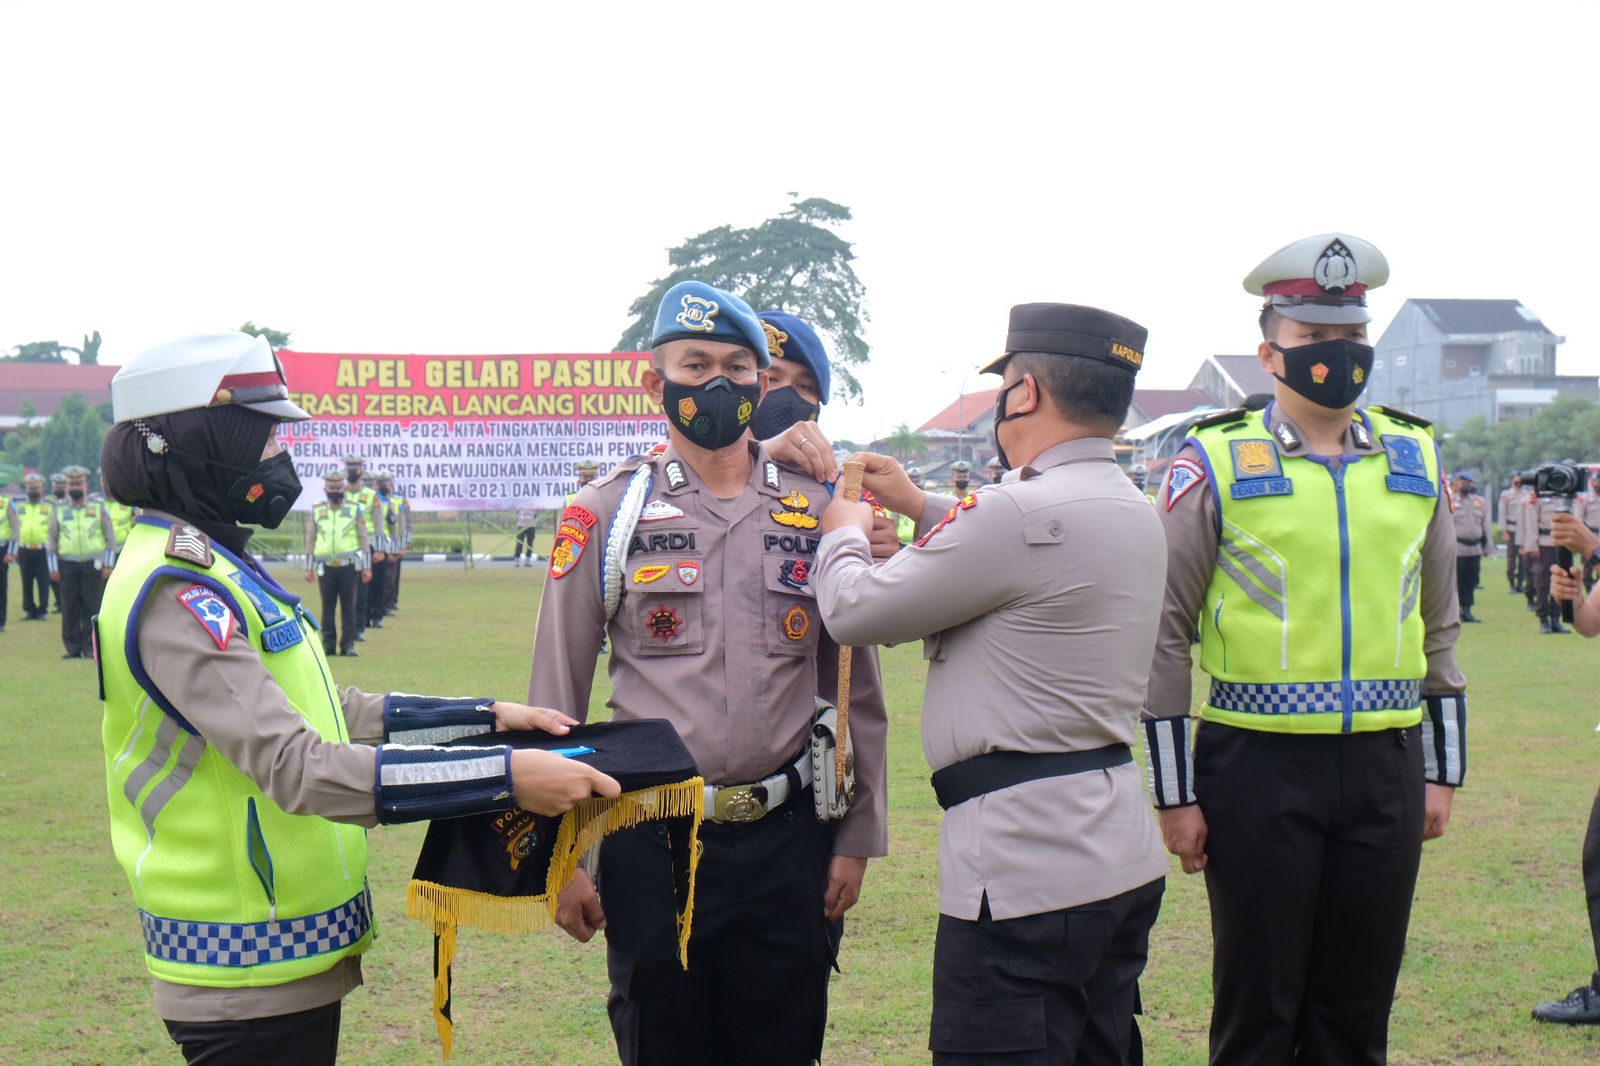 Kapolda Riau Pimpin Gelar Pasukan Operadi Zebra LK, Displin Prokes & Tertib Berlalu Lintas